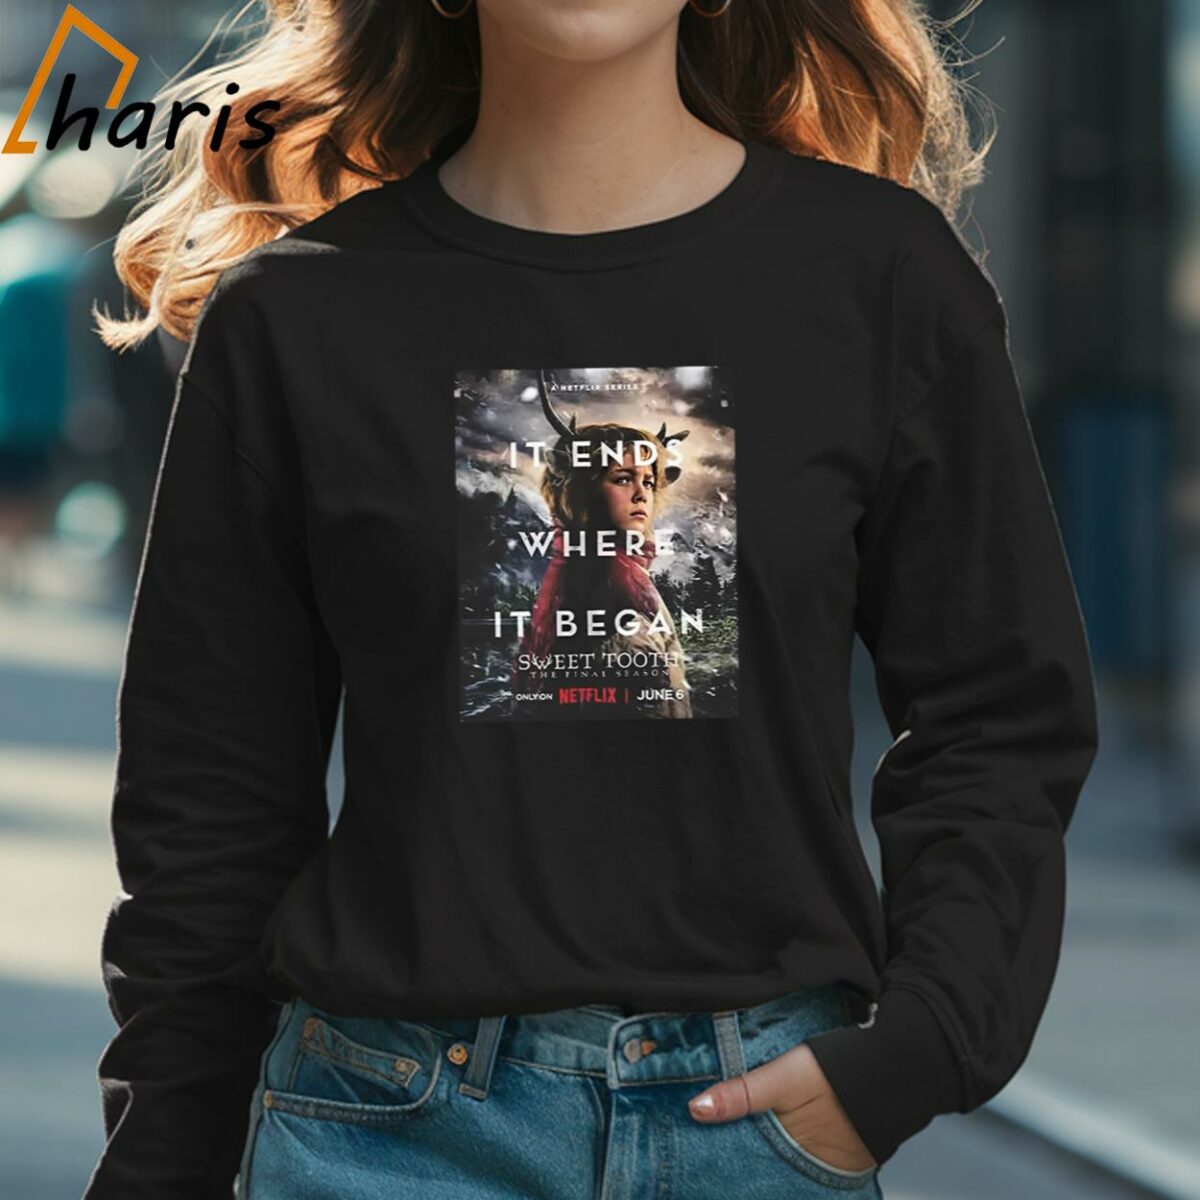 The Boys Season 4 New Poster Homies Angels Fan Gifts Classic T Shirt 3 Long sleeve shirt